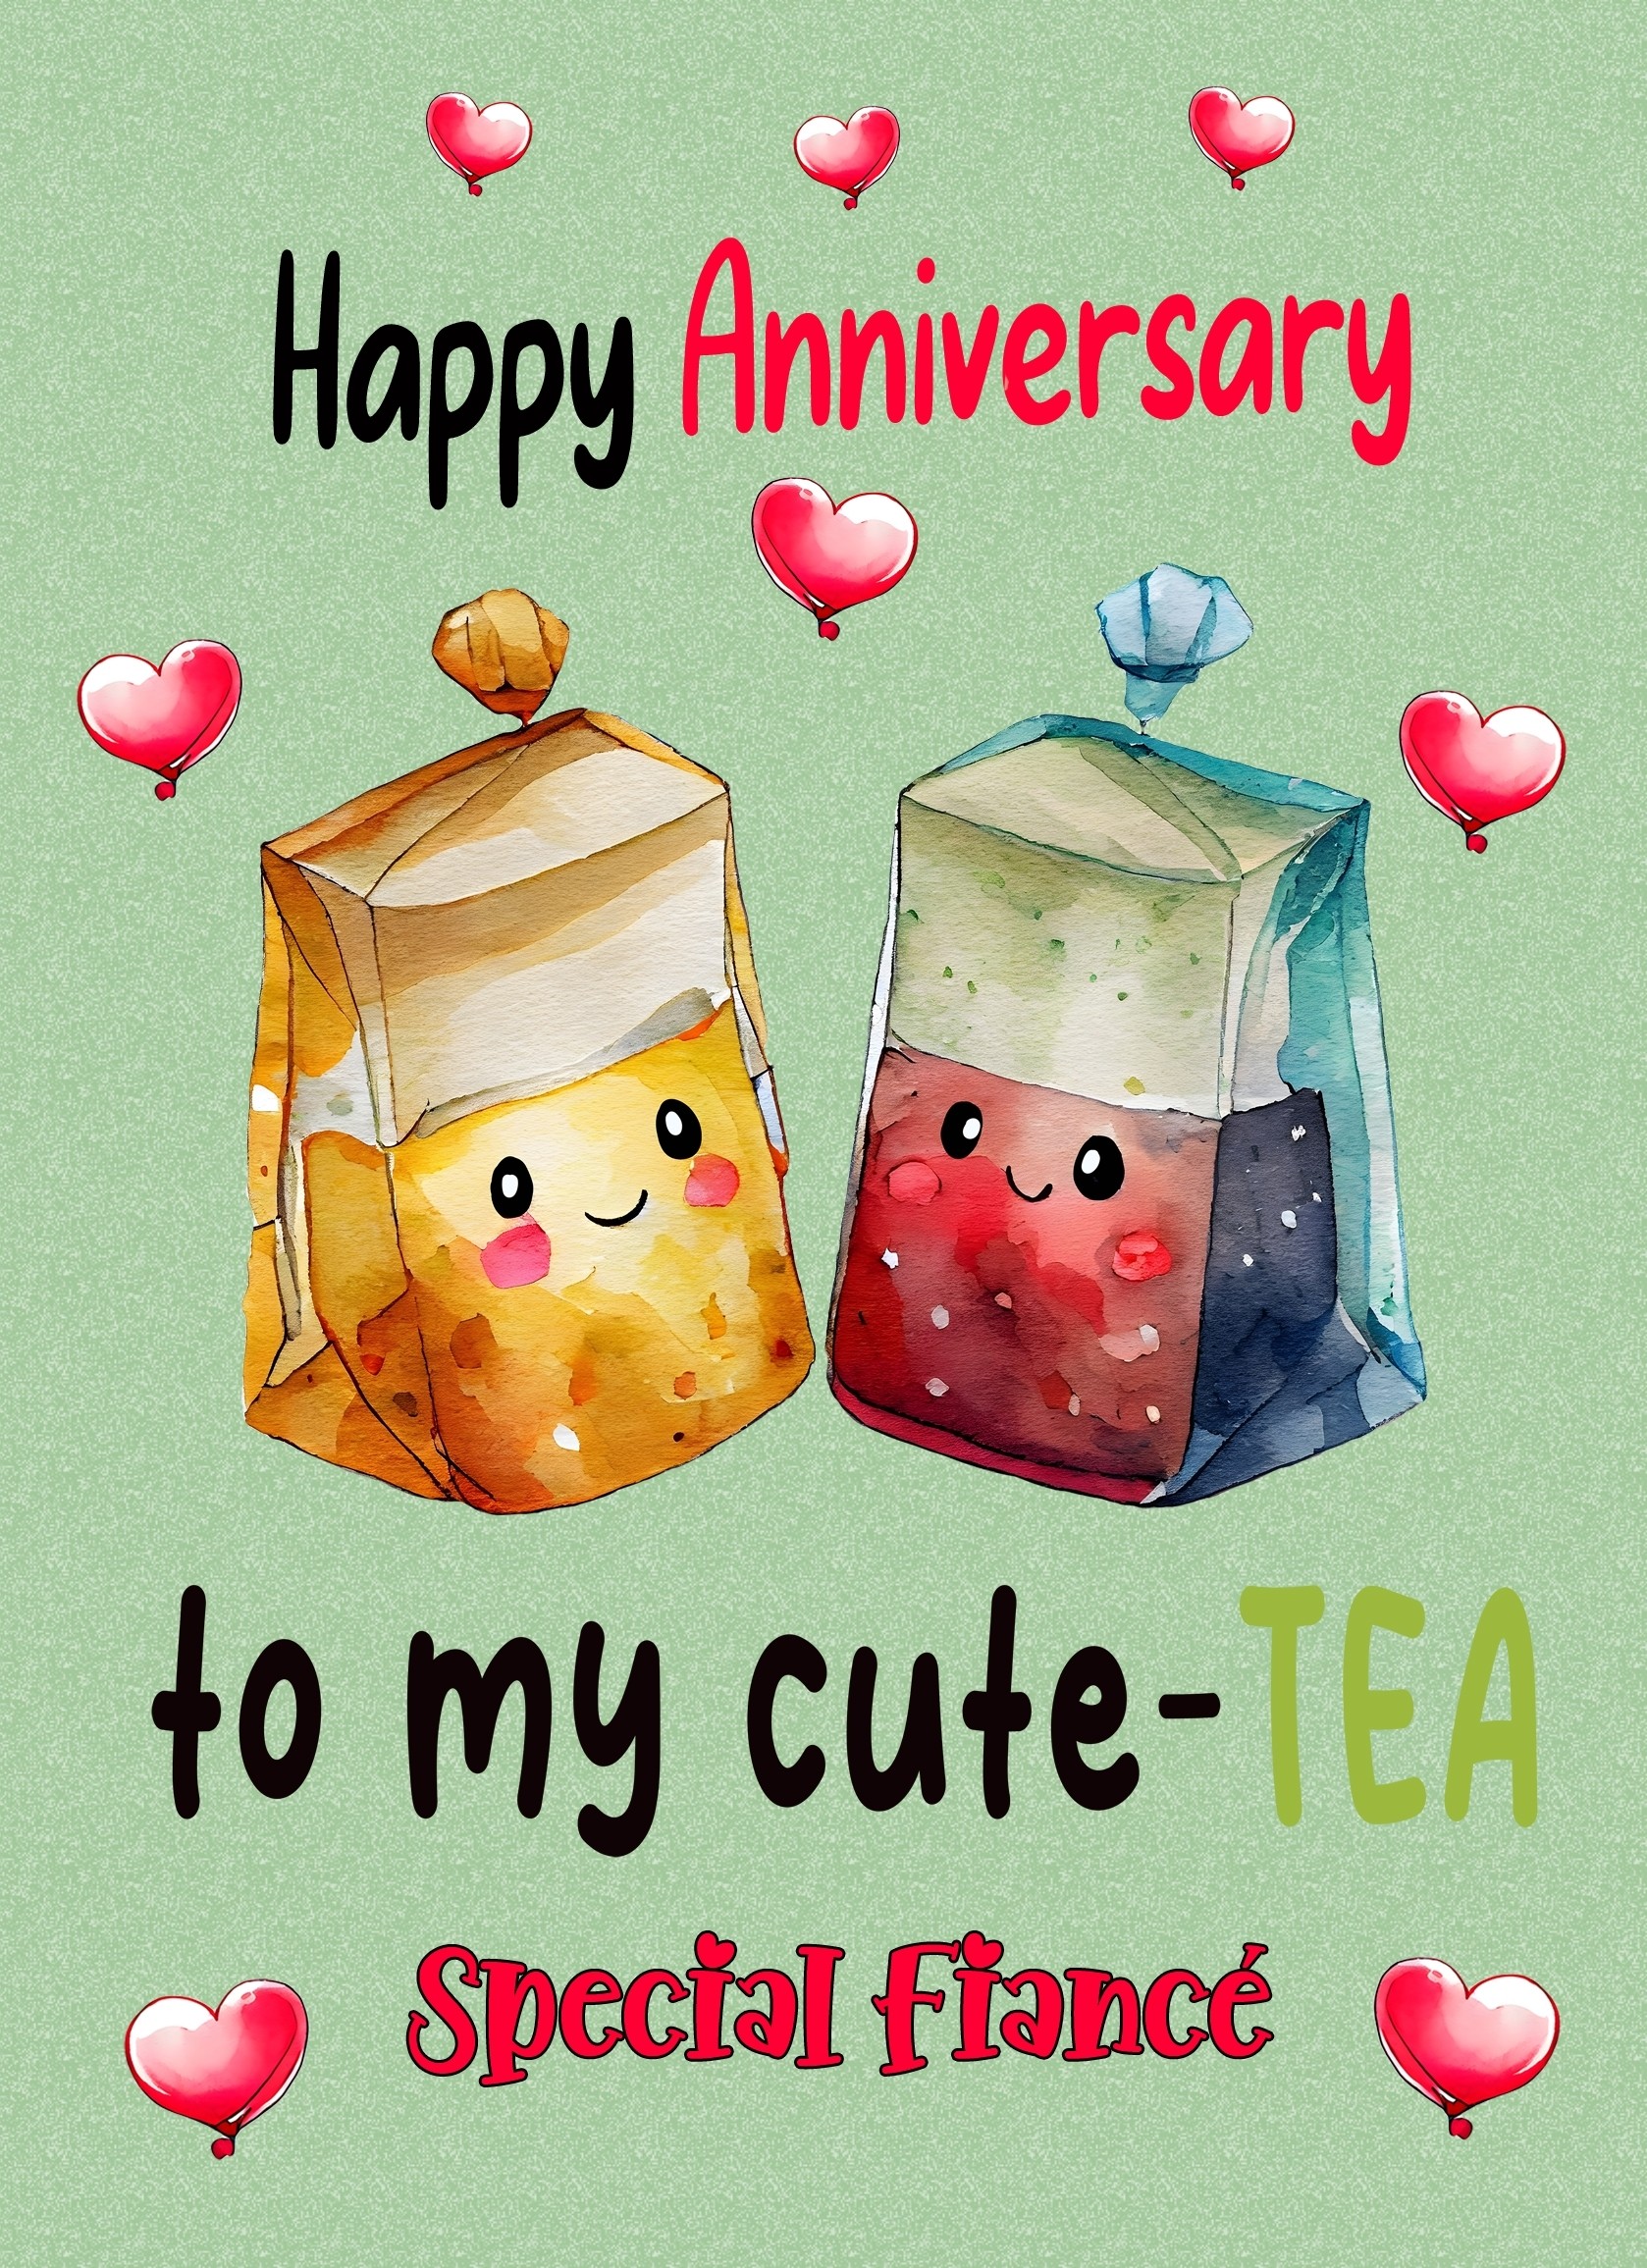 Funny Pun Romantic Anniversary Card for Fiance (Cute Tea)